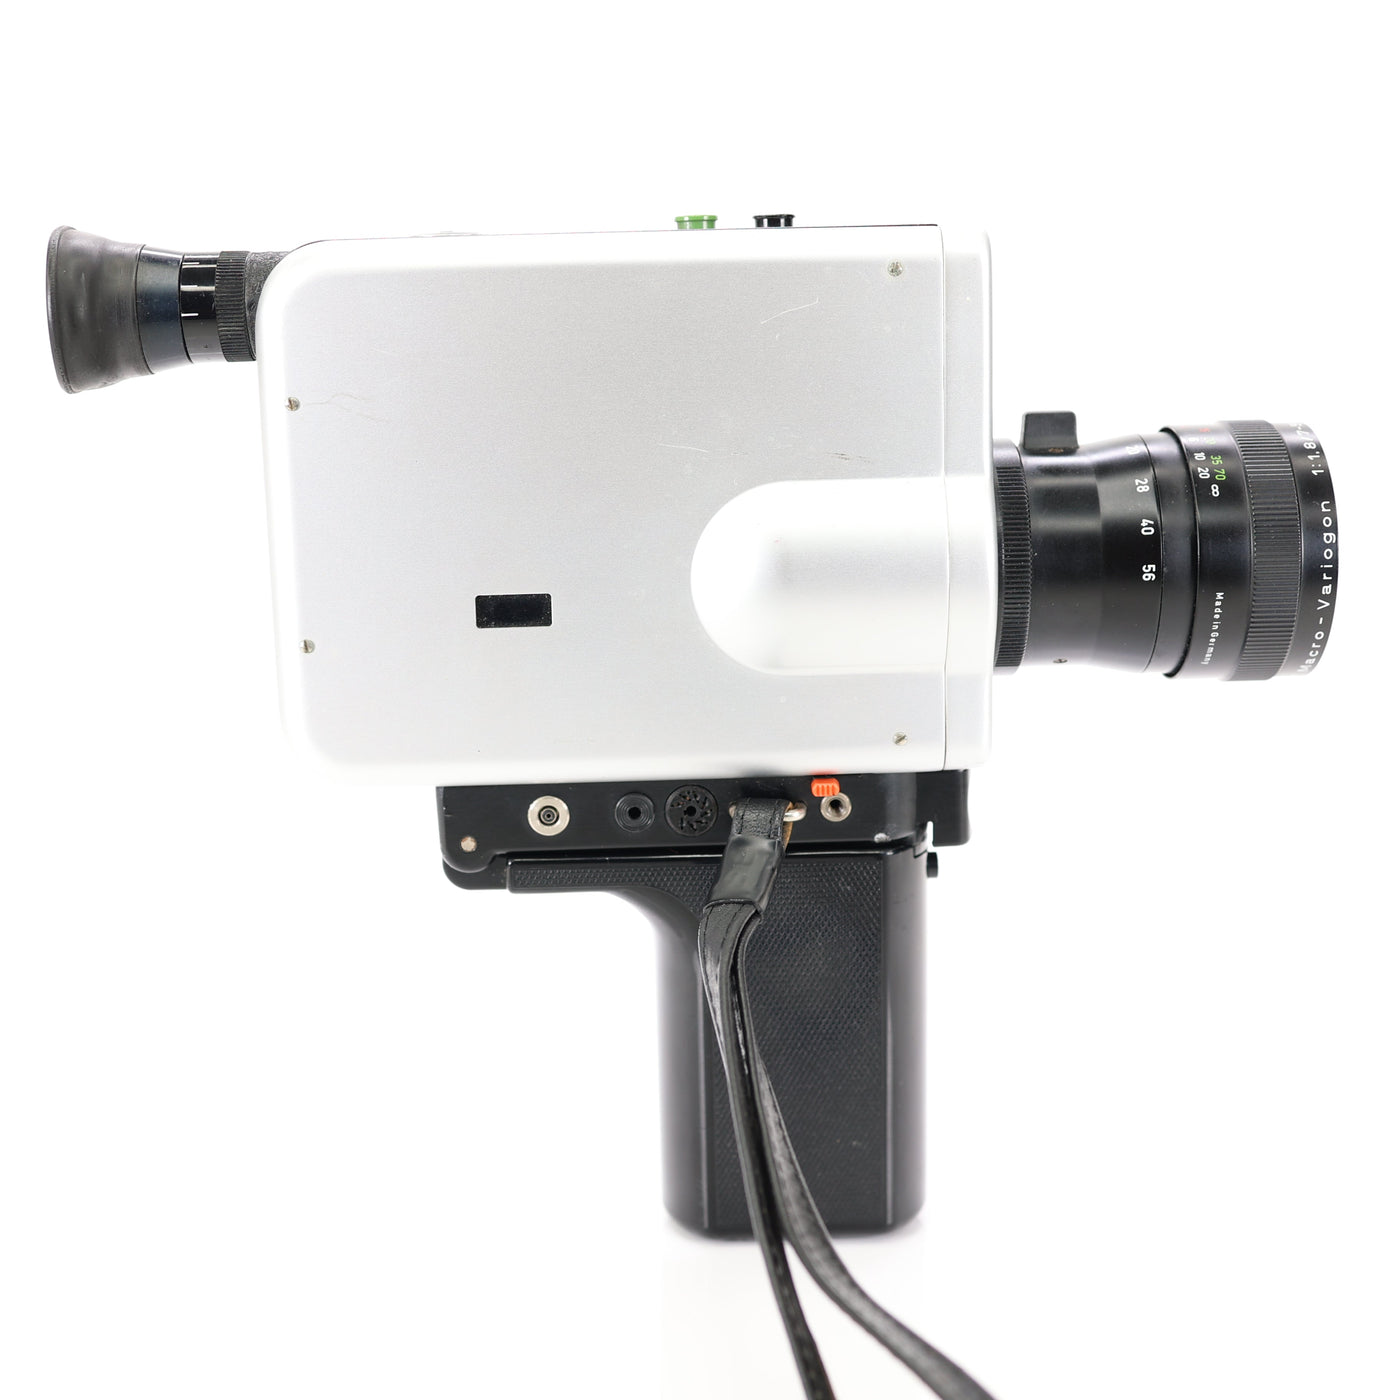 Nizo 561 Macro Professionally Serviced and Fully Tested Super 8 Cameras Braun Nizo 